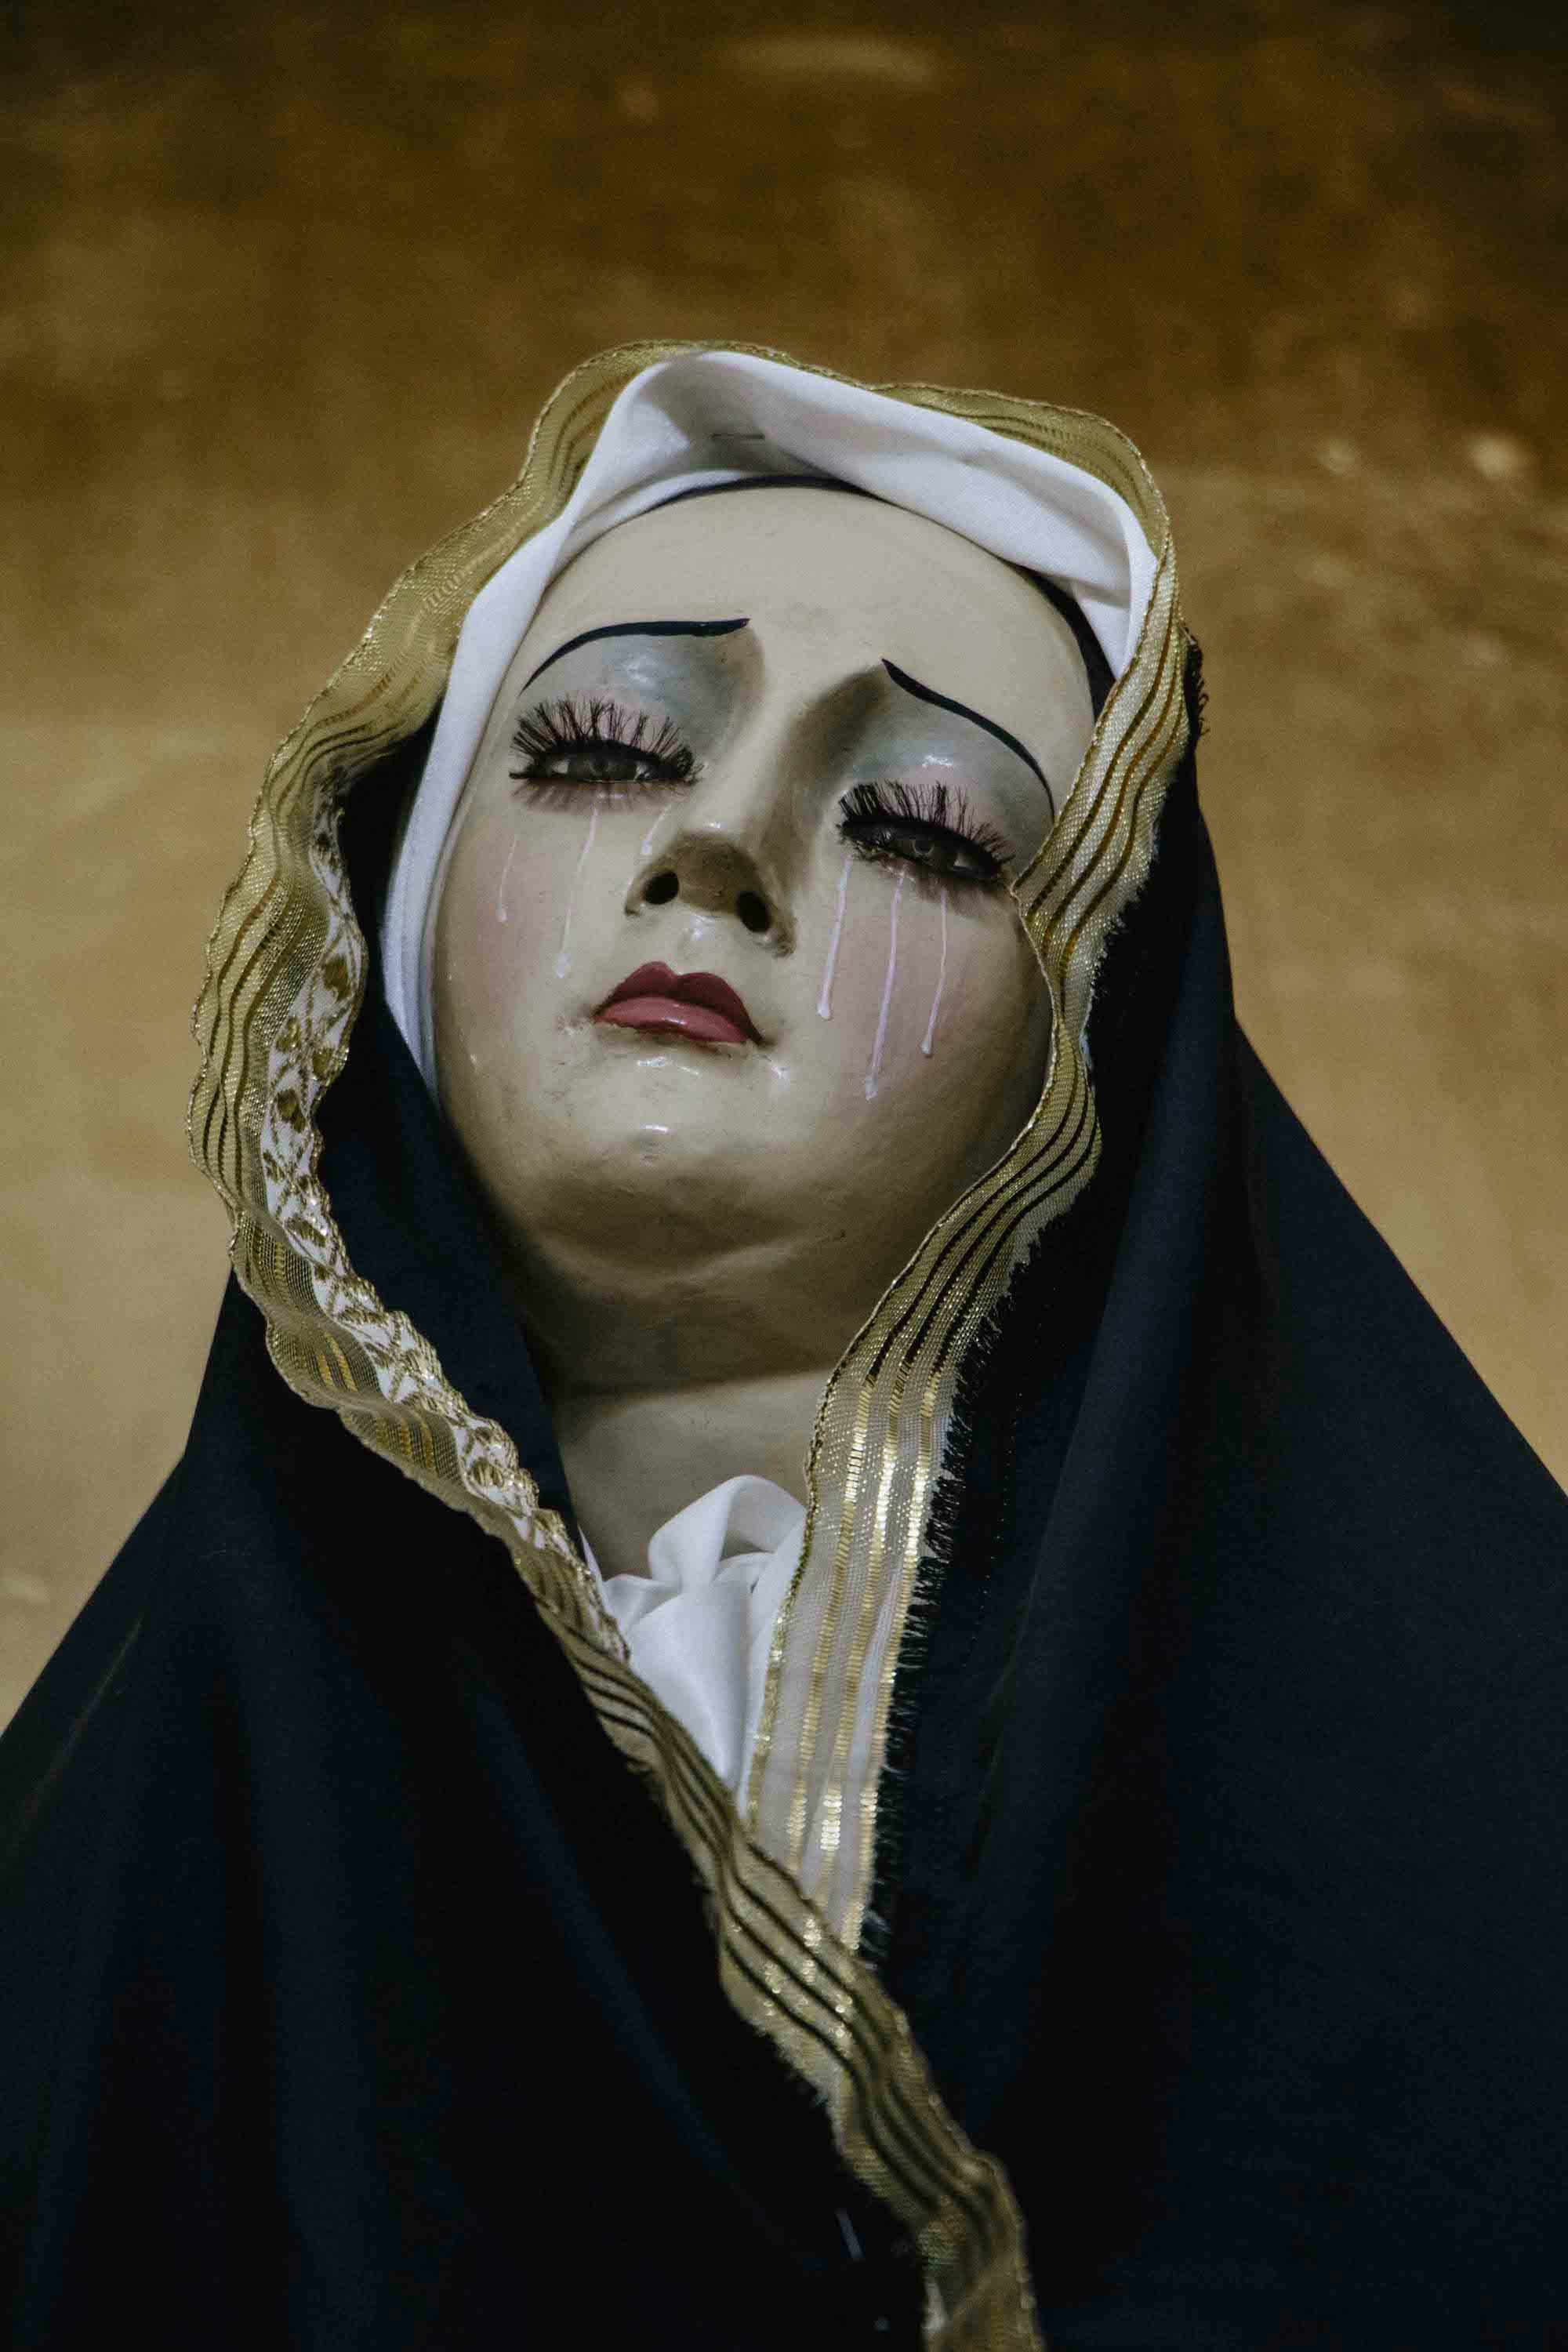 Image of a statue of La Llorona, a female figure from Latin American folklore © Marisol Mendez